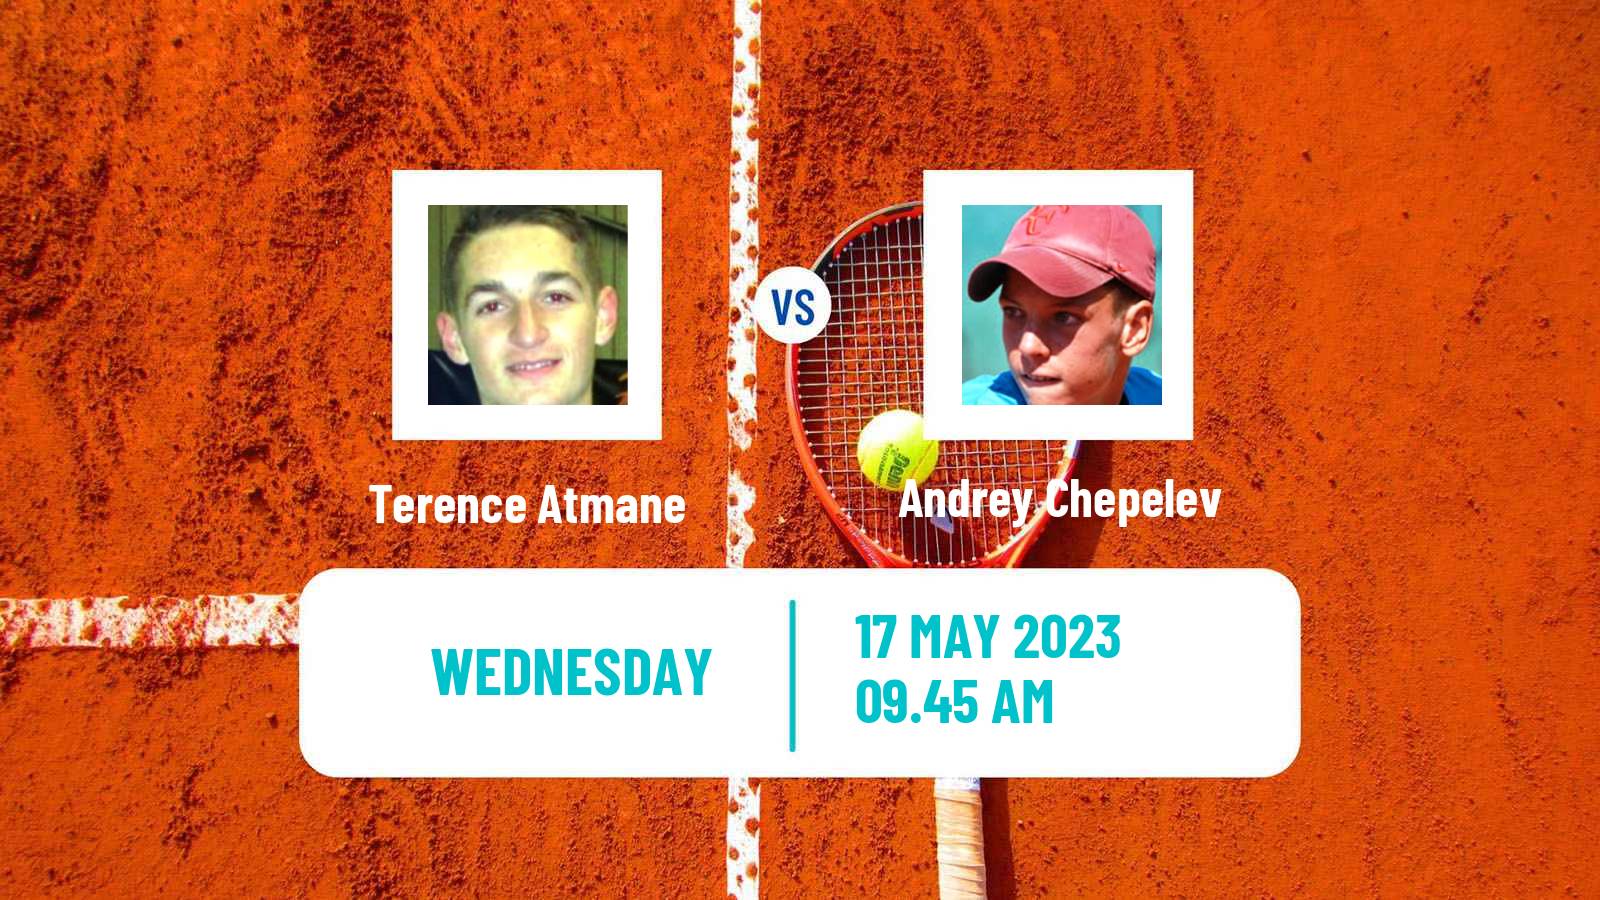 Tennis ITF M25 Reggio Emilia Men Terence Atmane - Andrey Chepelev